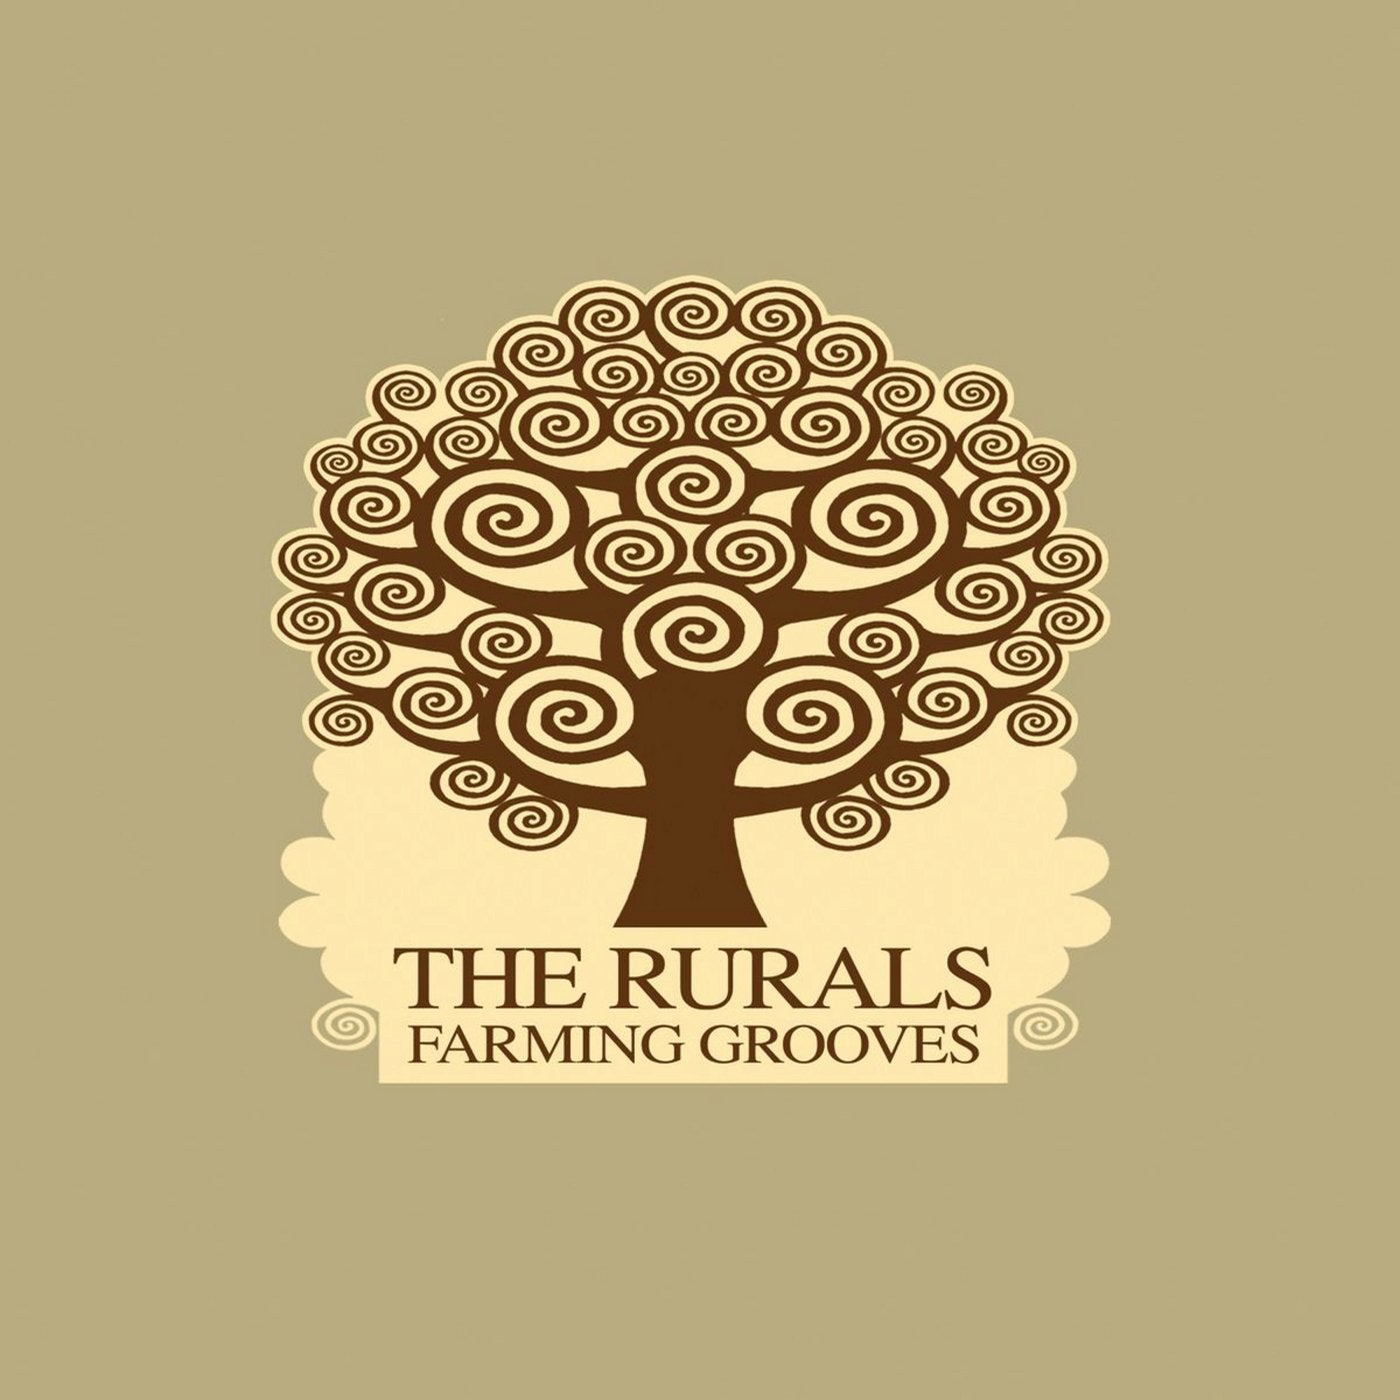 Farming Grooves